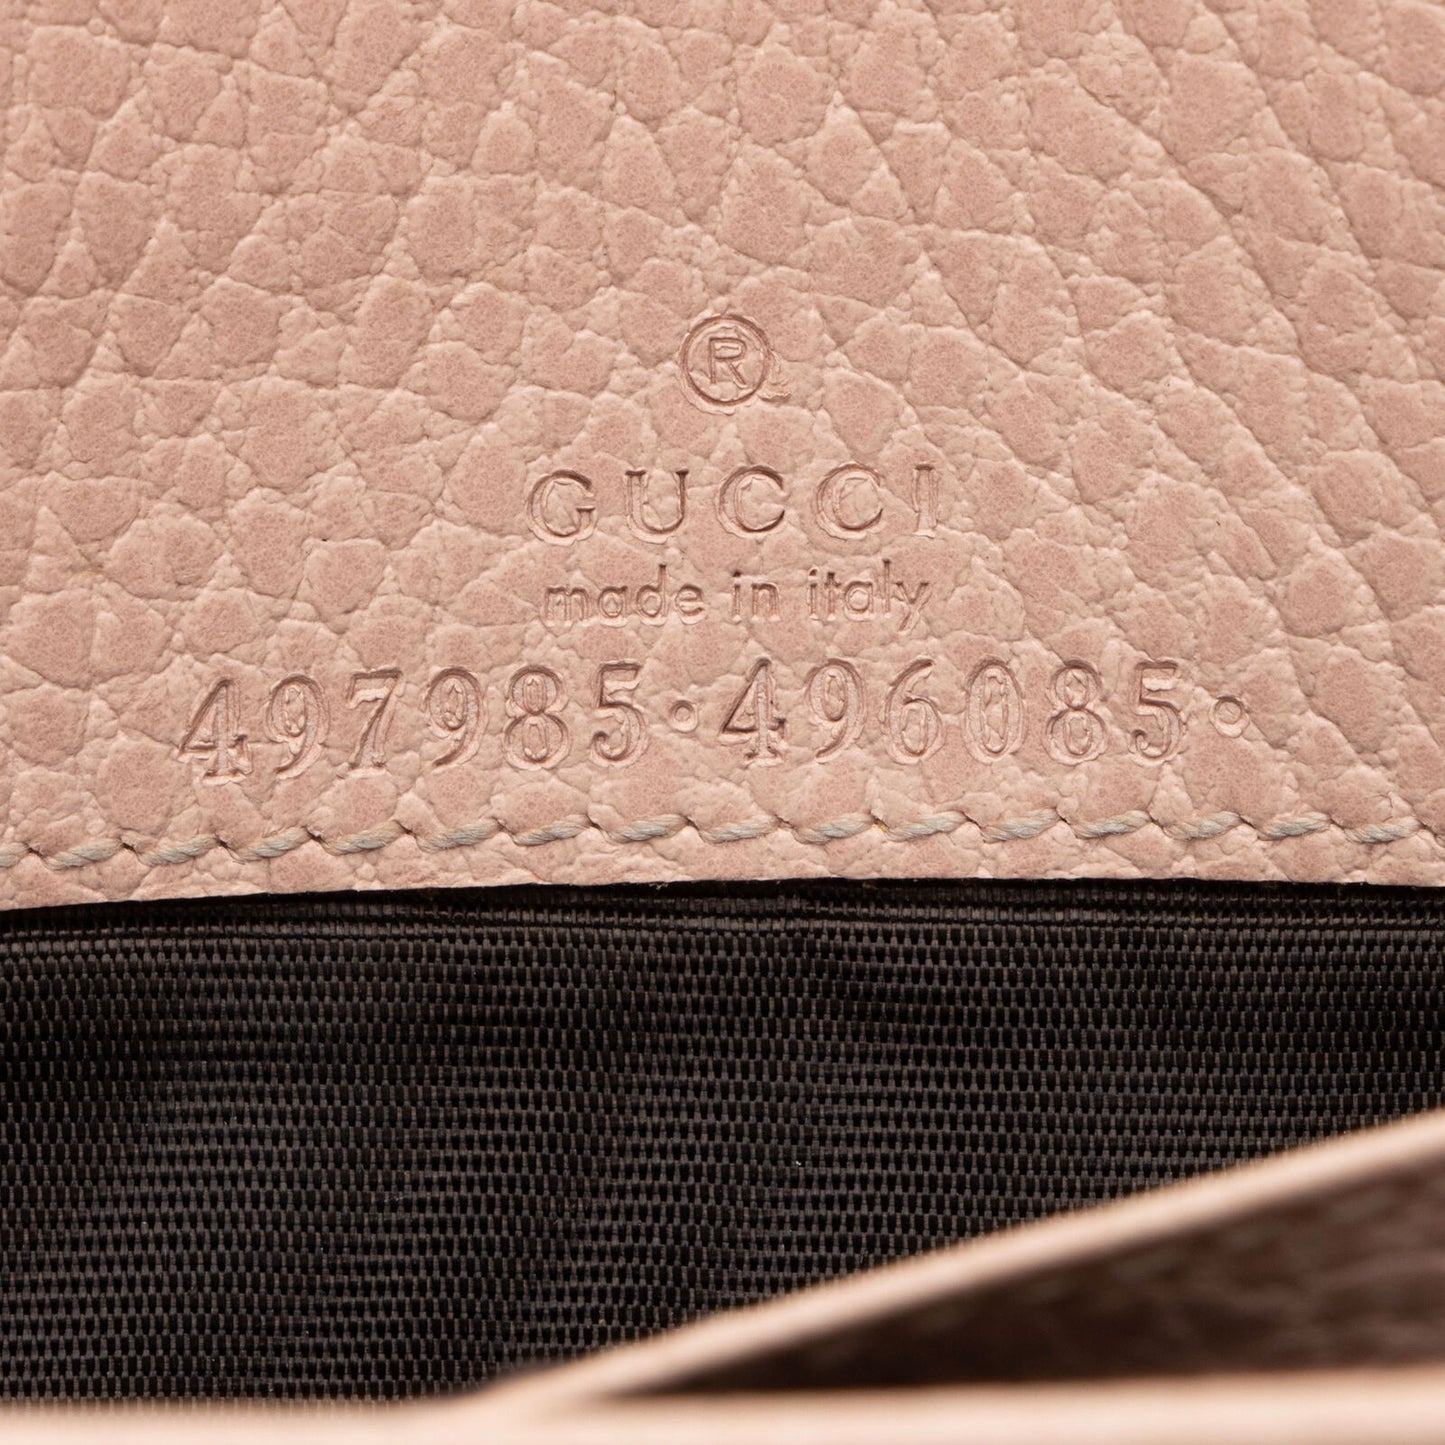 GUCCI Dollar Calfskin Mini GG Marmont Chain Wallet Perfect Pink